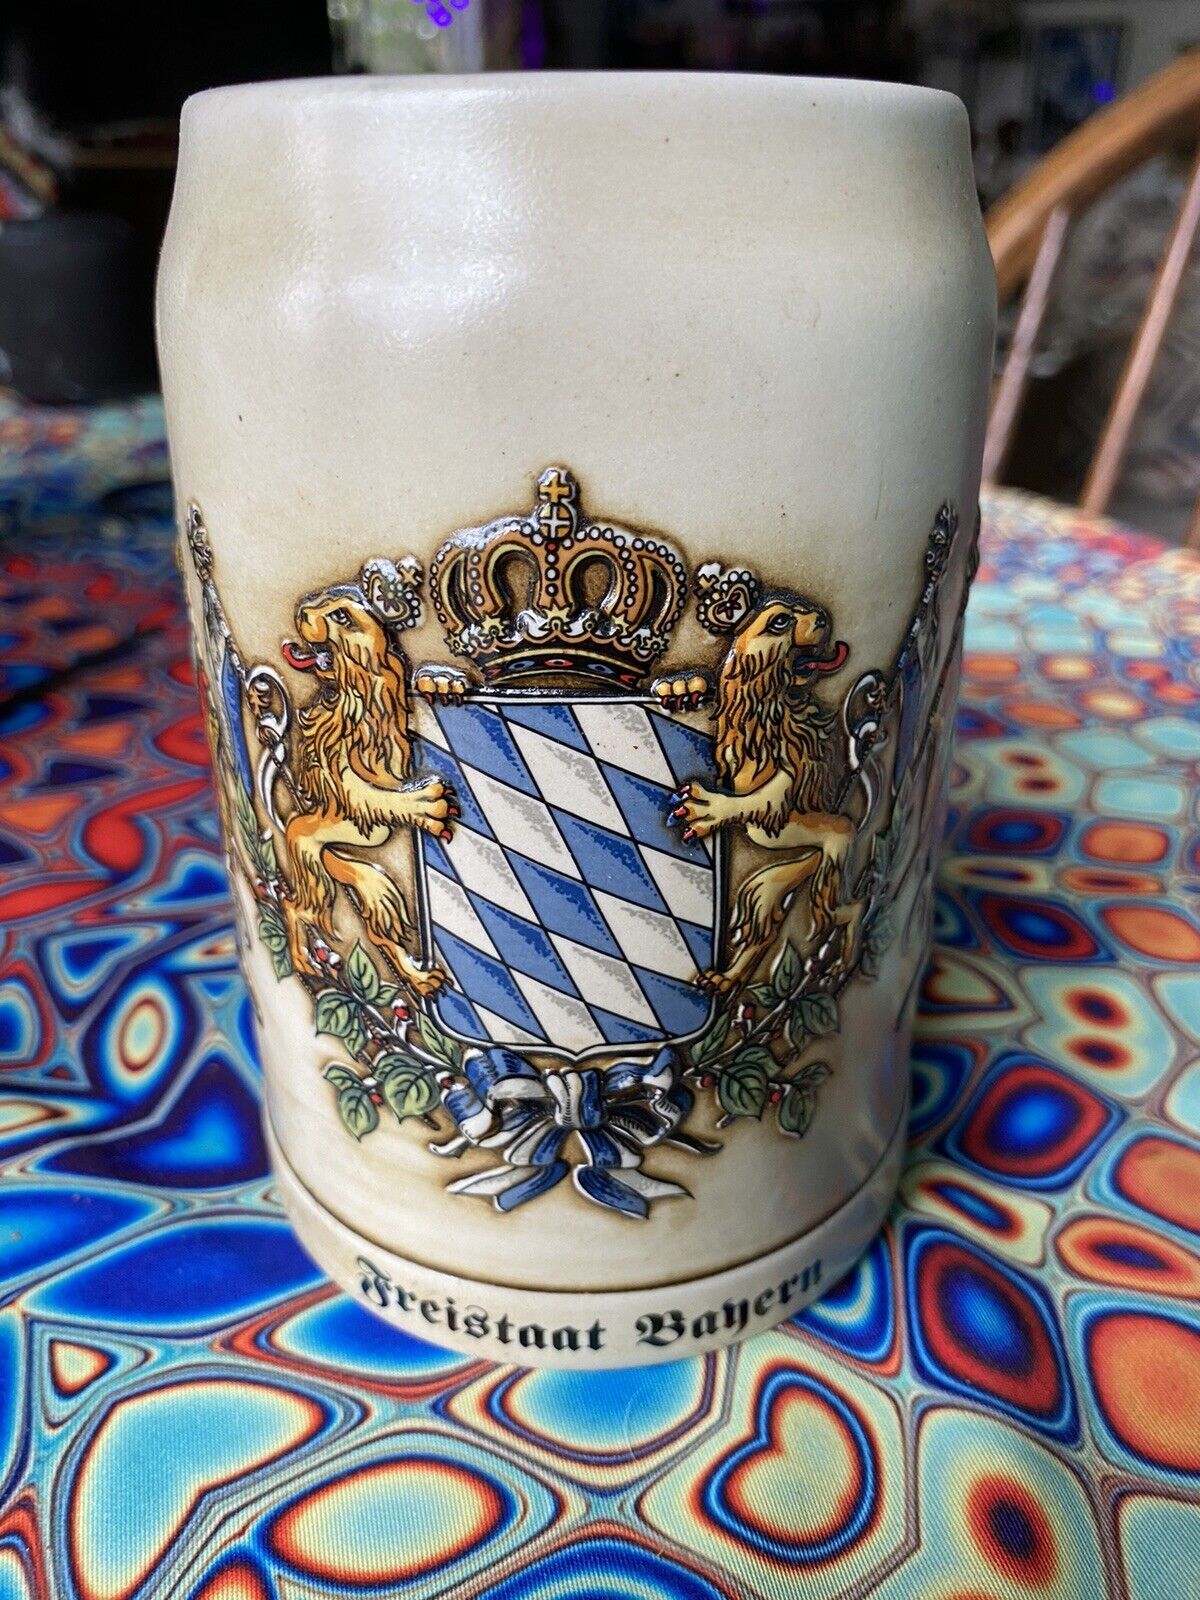 Freistaat Bayern (Bavaria Germany) Stoneware Beer Stein  0.5L Mug